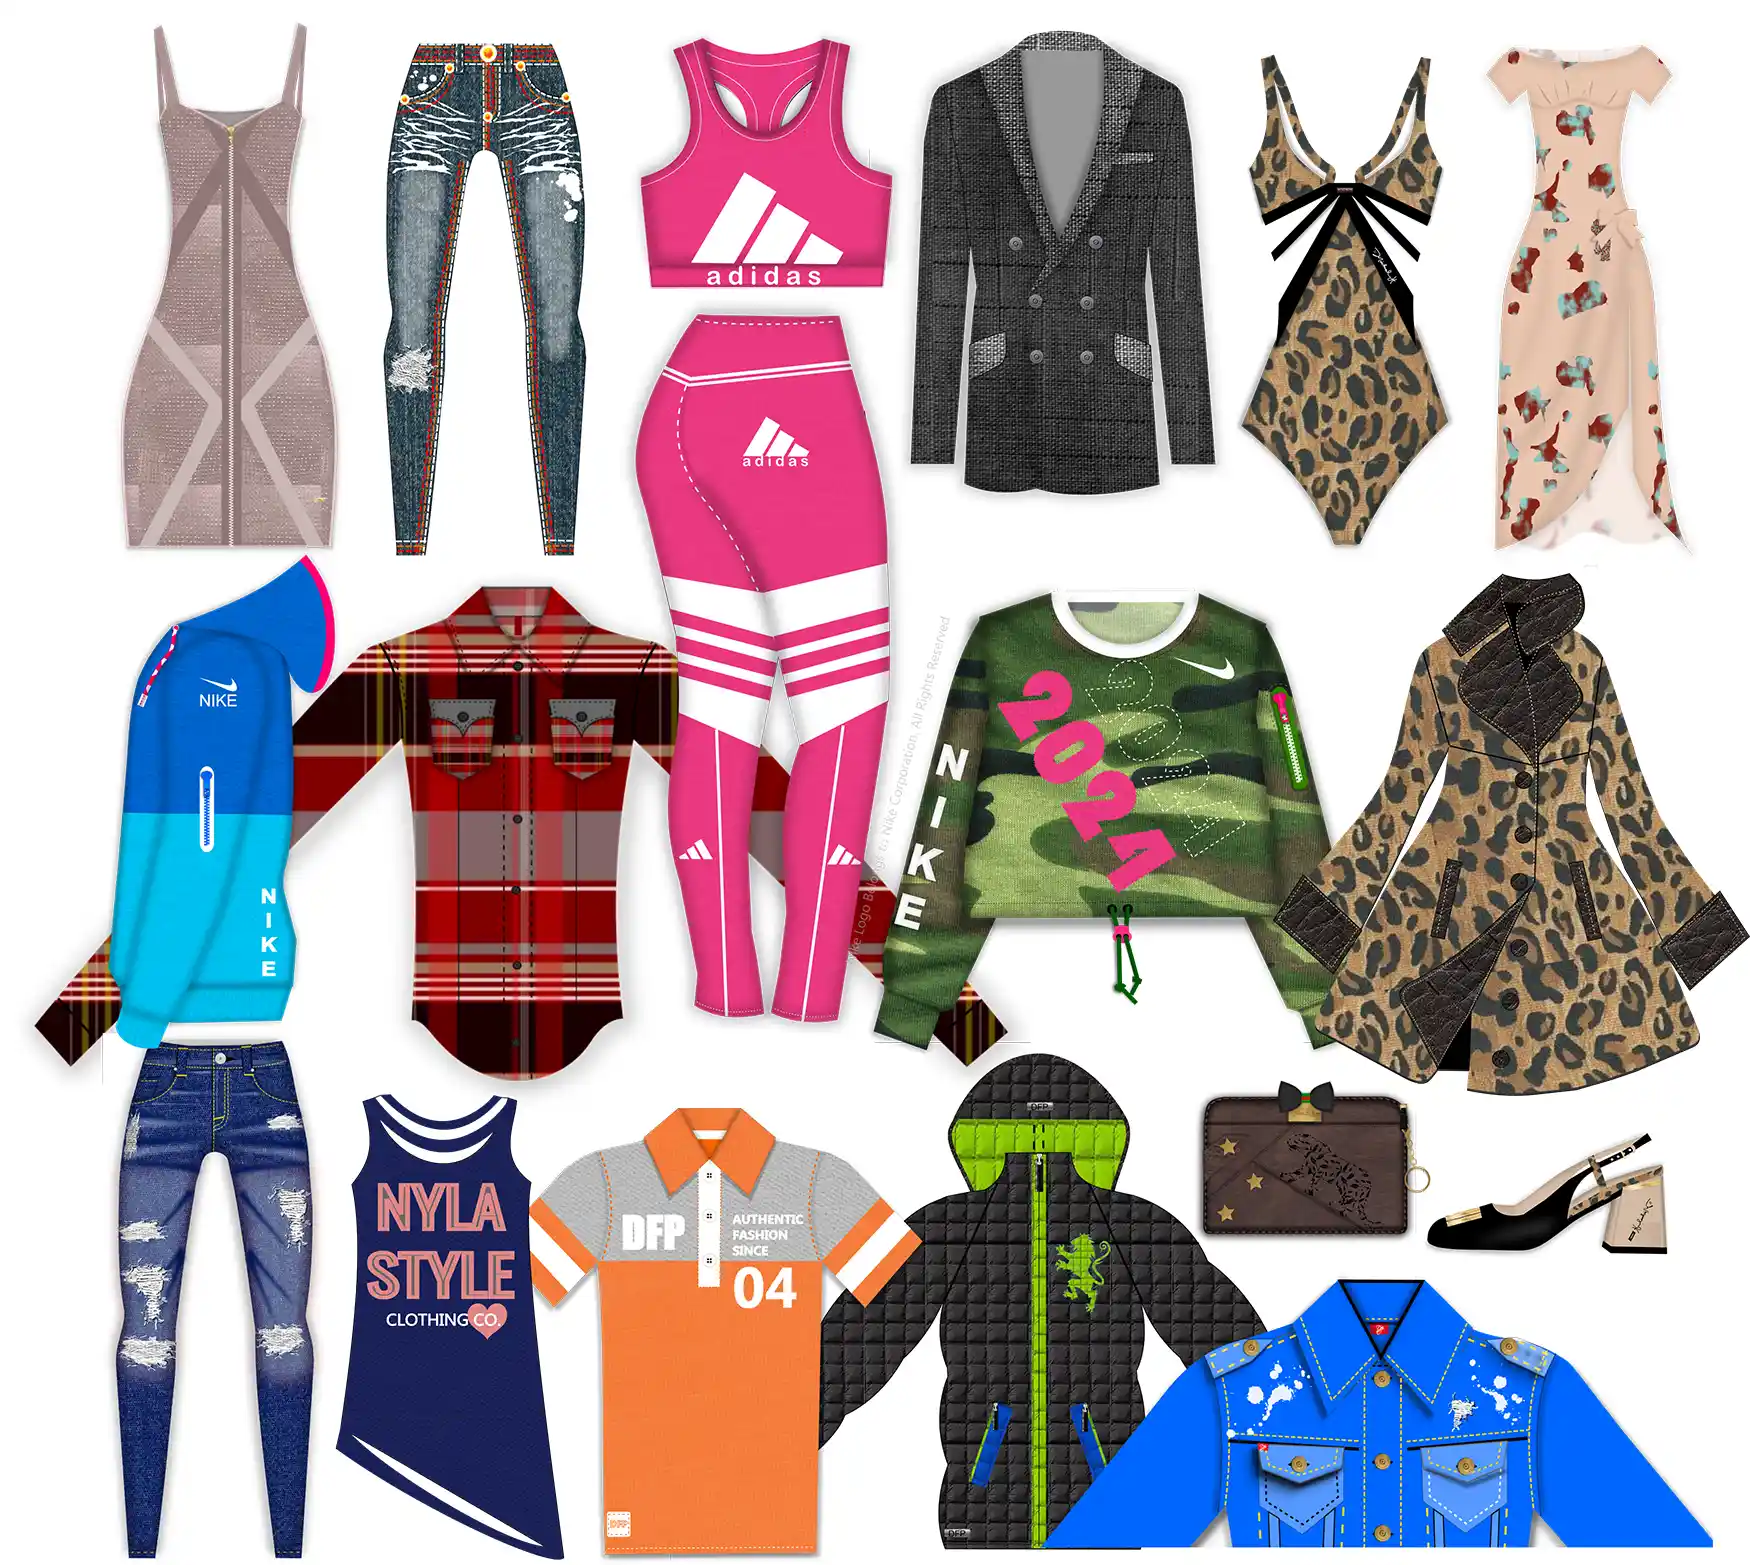 Fashion Design Software - program for designing your own clothing - Digital Fashion Pro